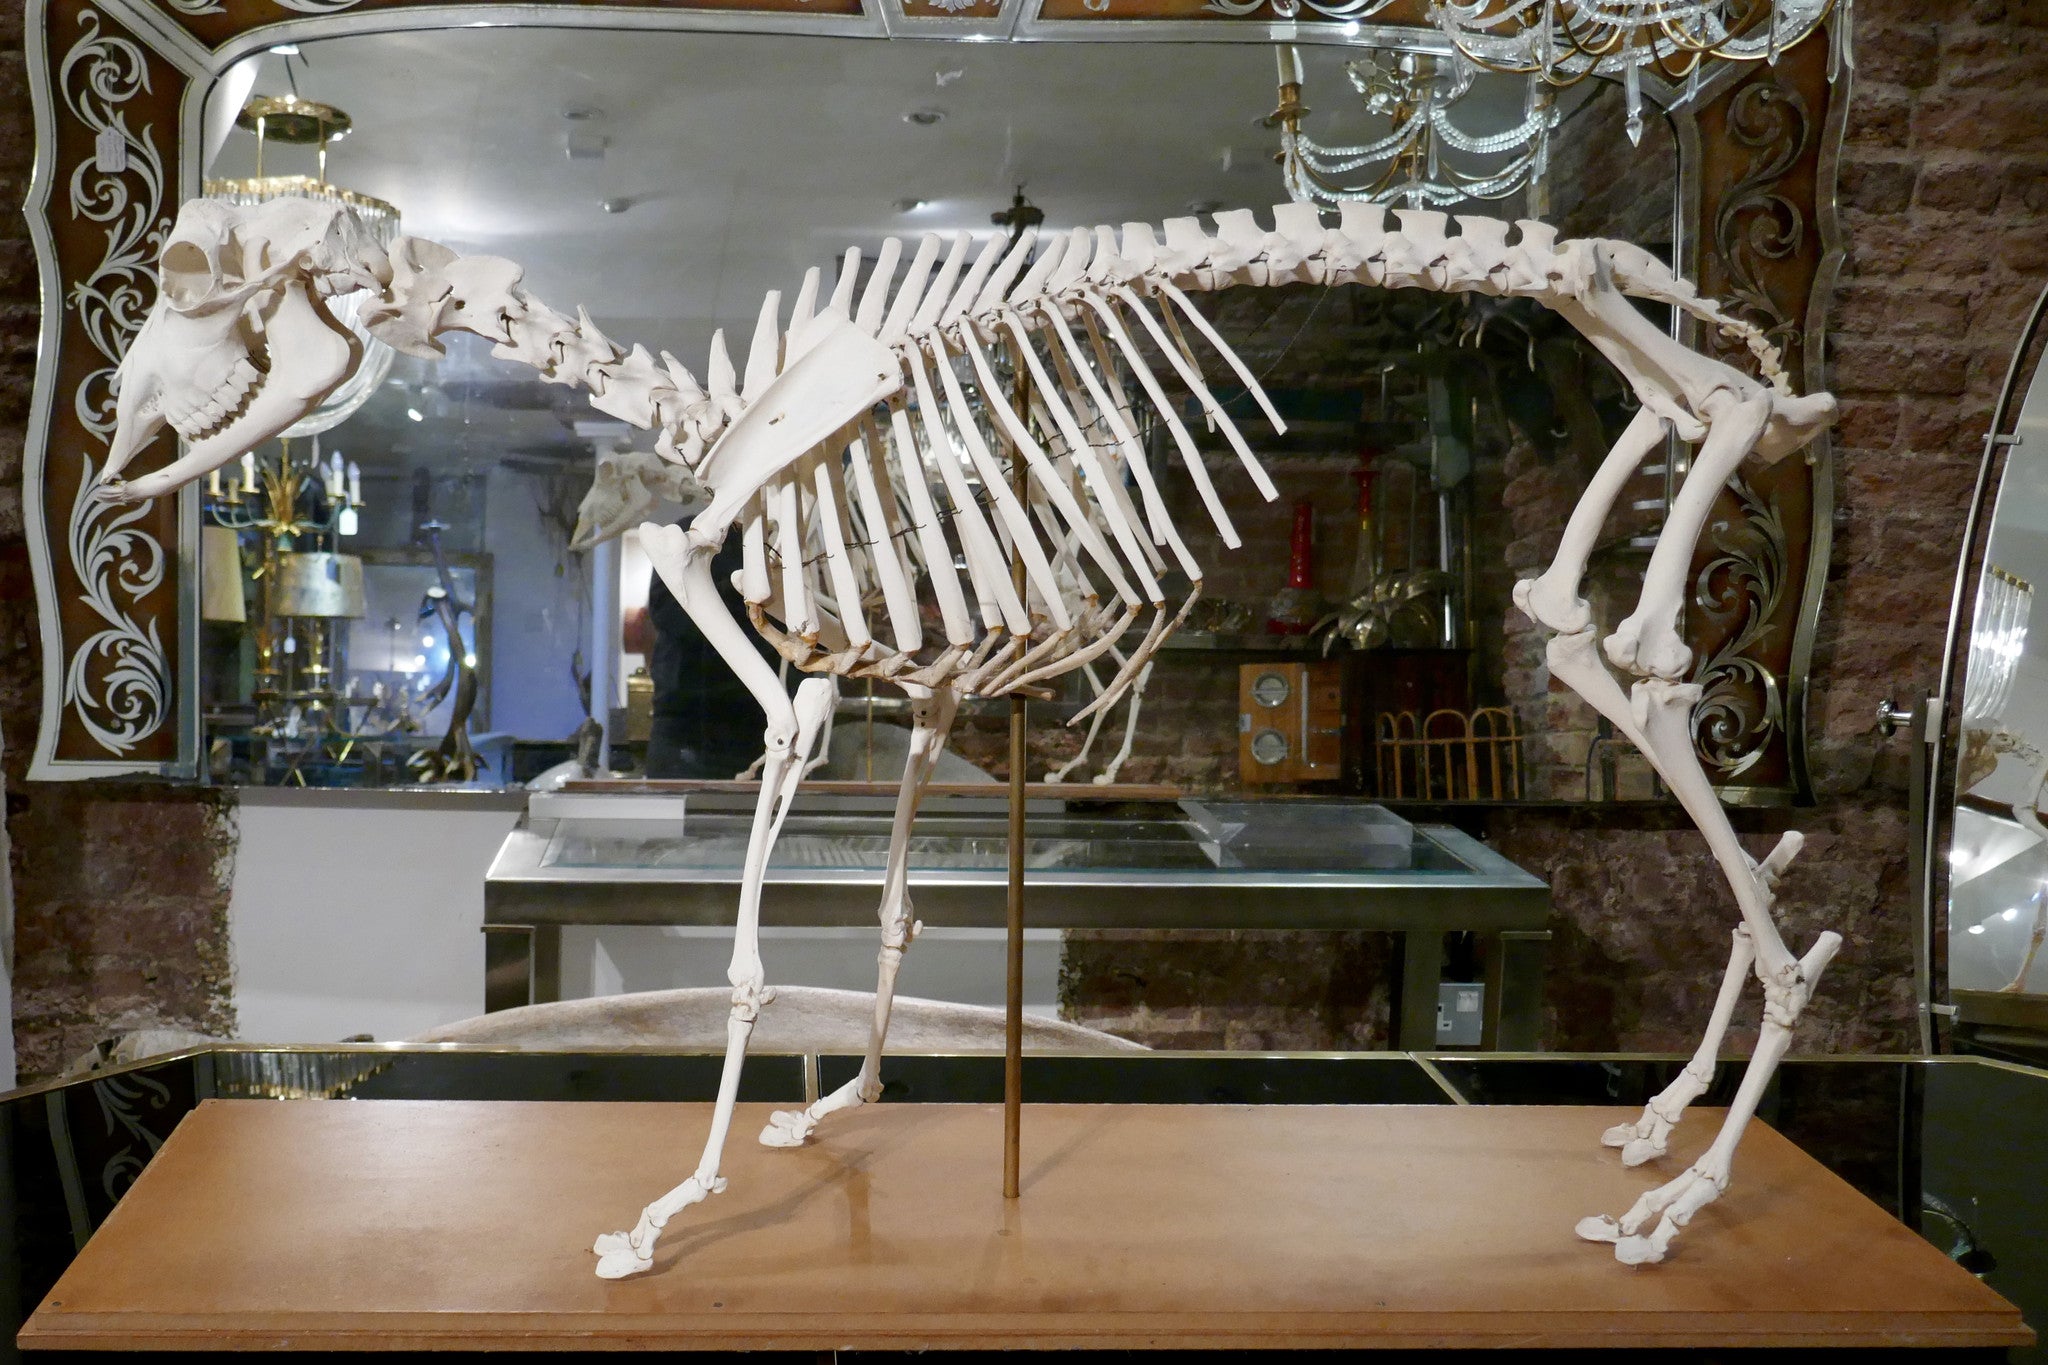 X Veterinary study of a sheep skeleton